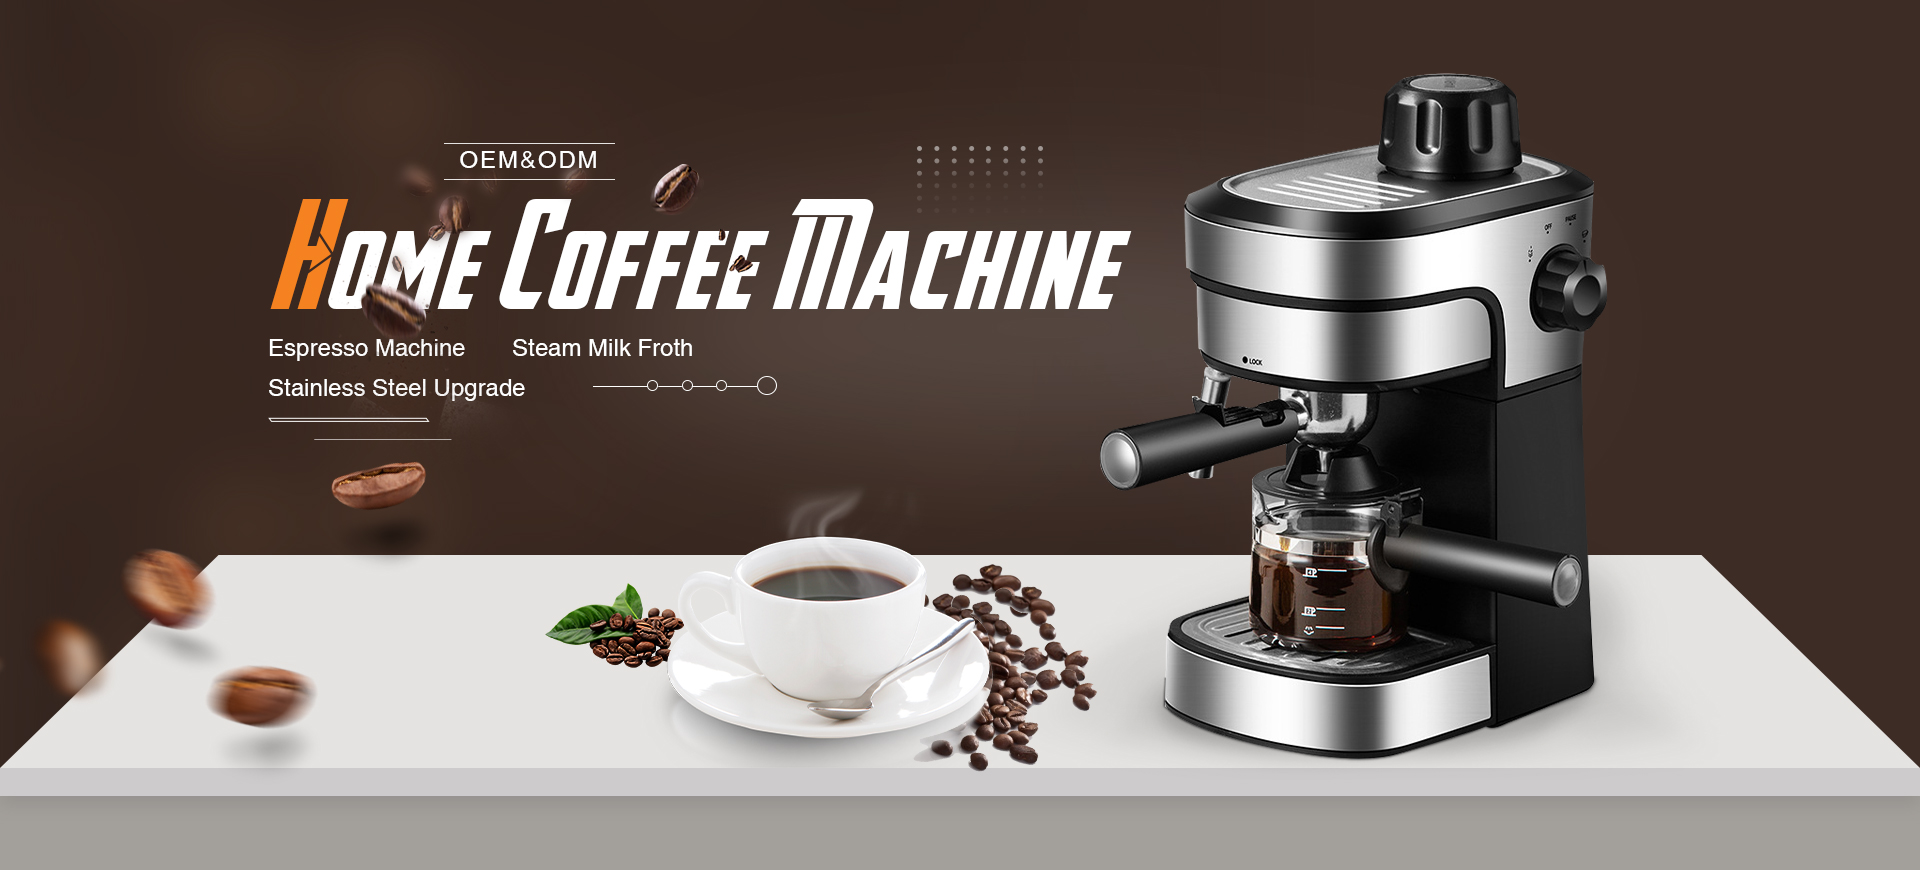 En İyi Ev Tipi Kahve Makinesi